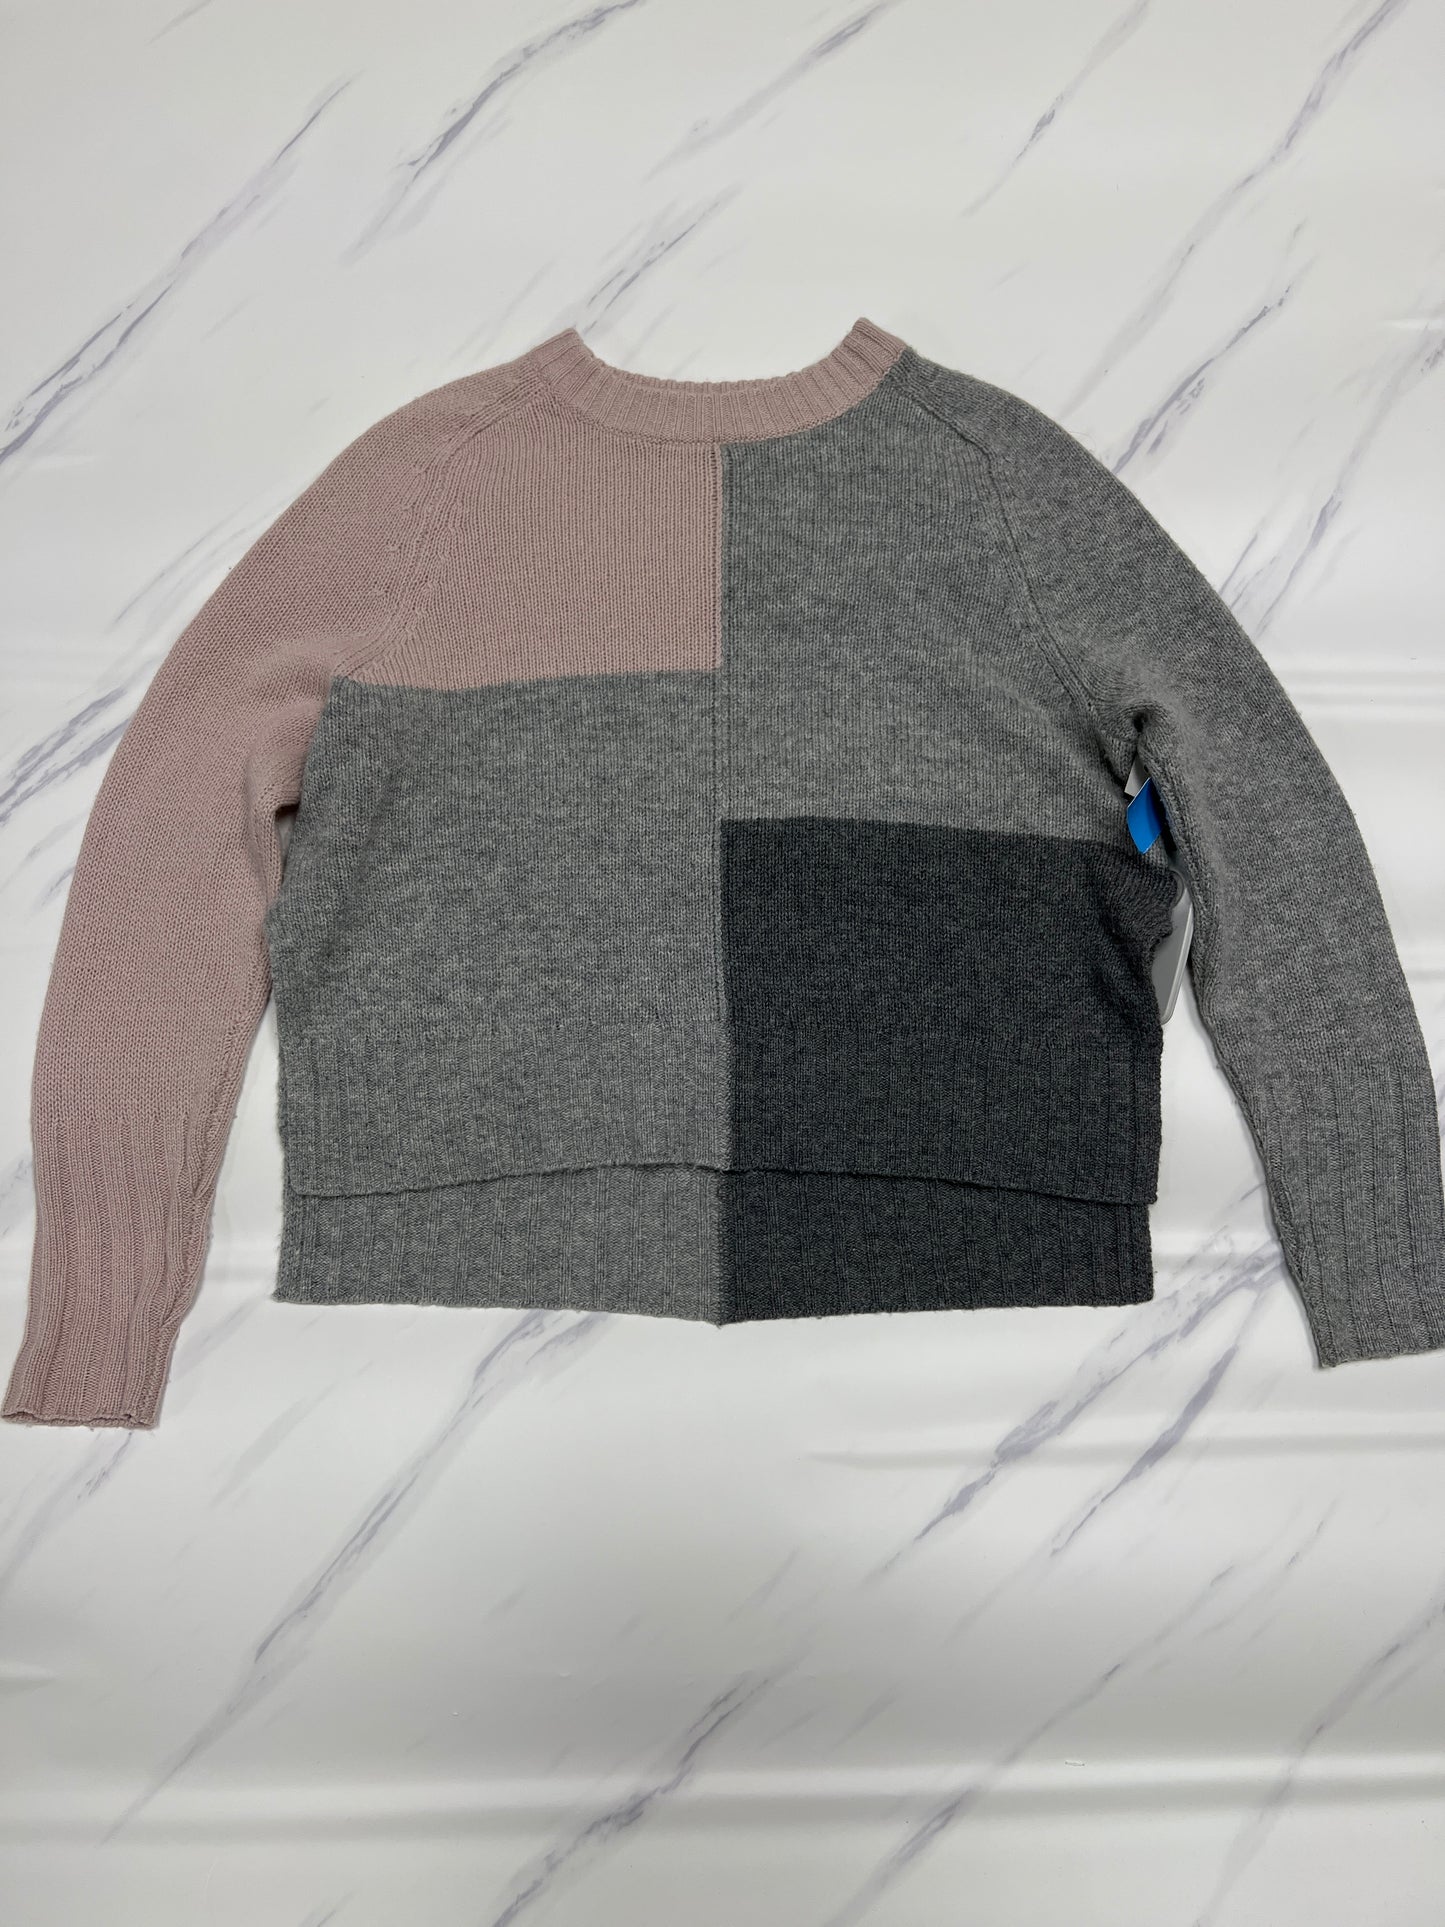 Sweater Cashmere By Cma  Size: Xs